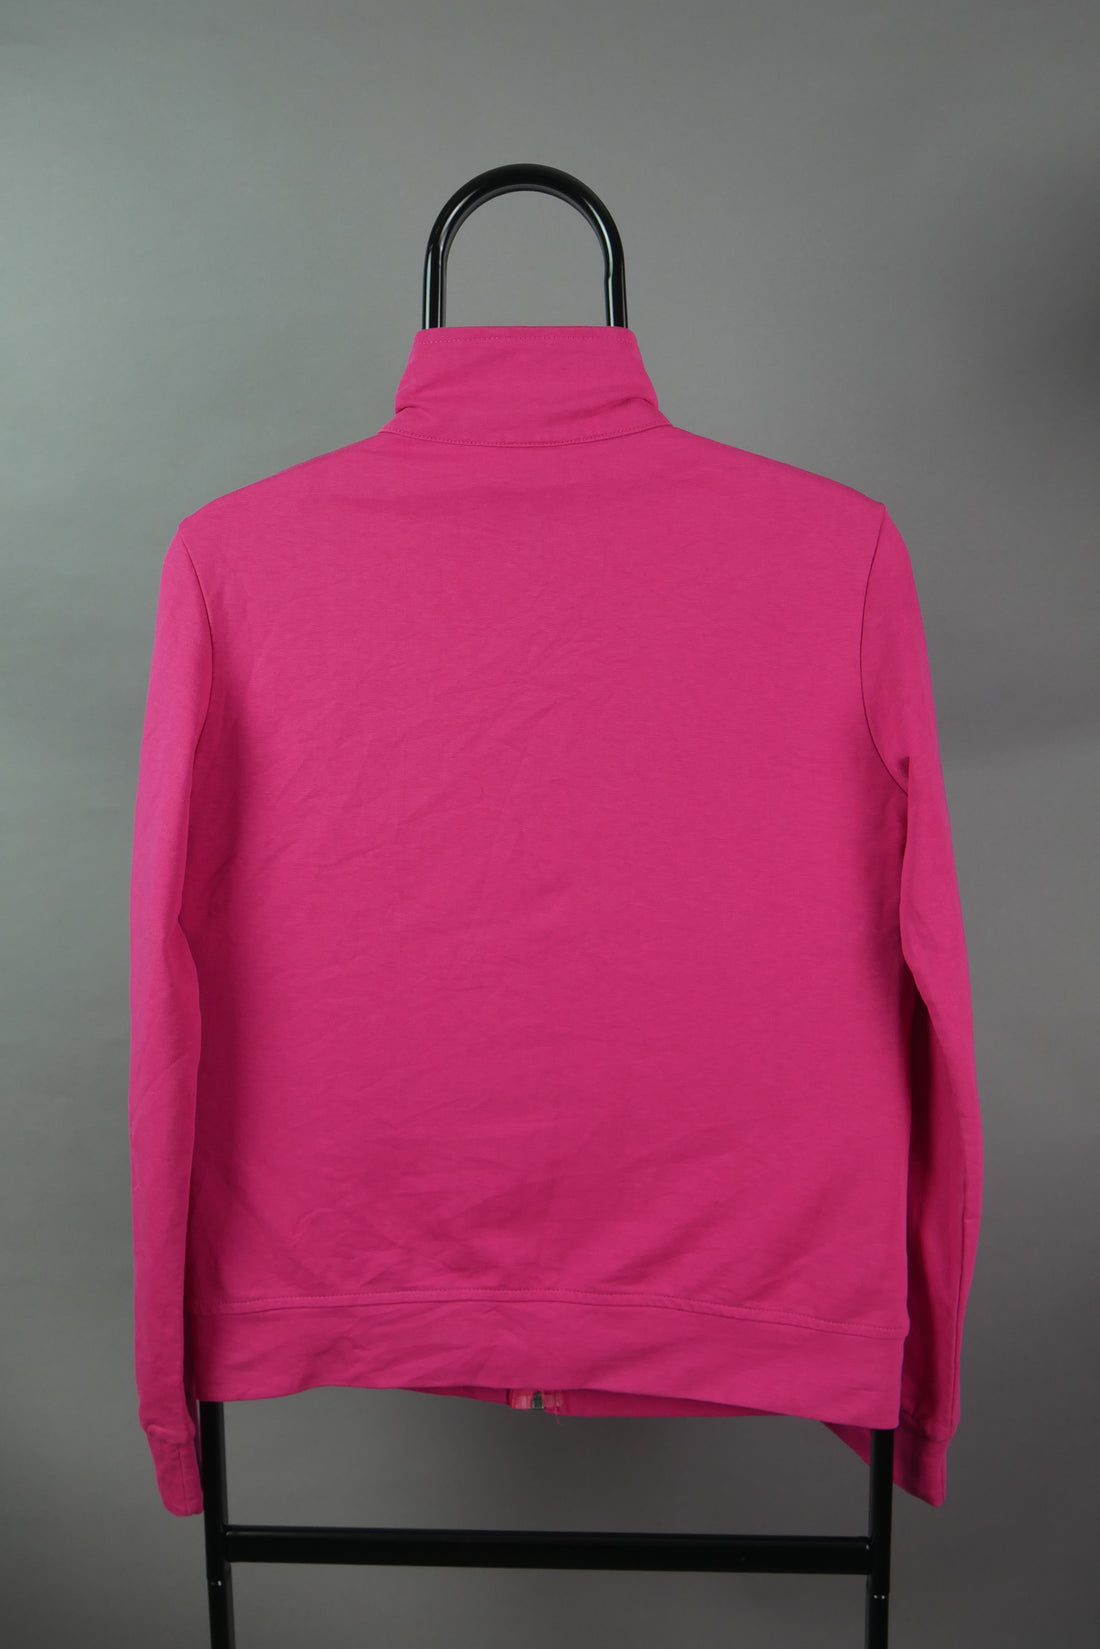 The Adidas Bootleg Hot Pink Zip Up Sweatshirt (Women's M)